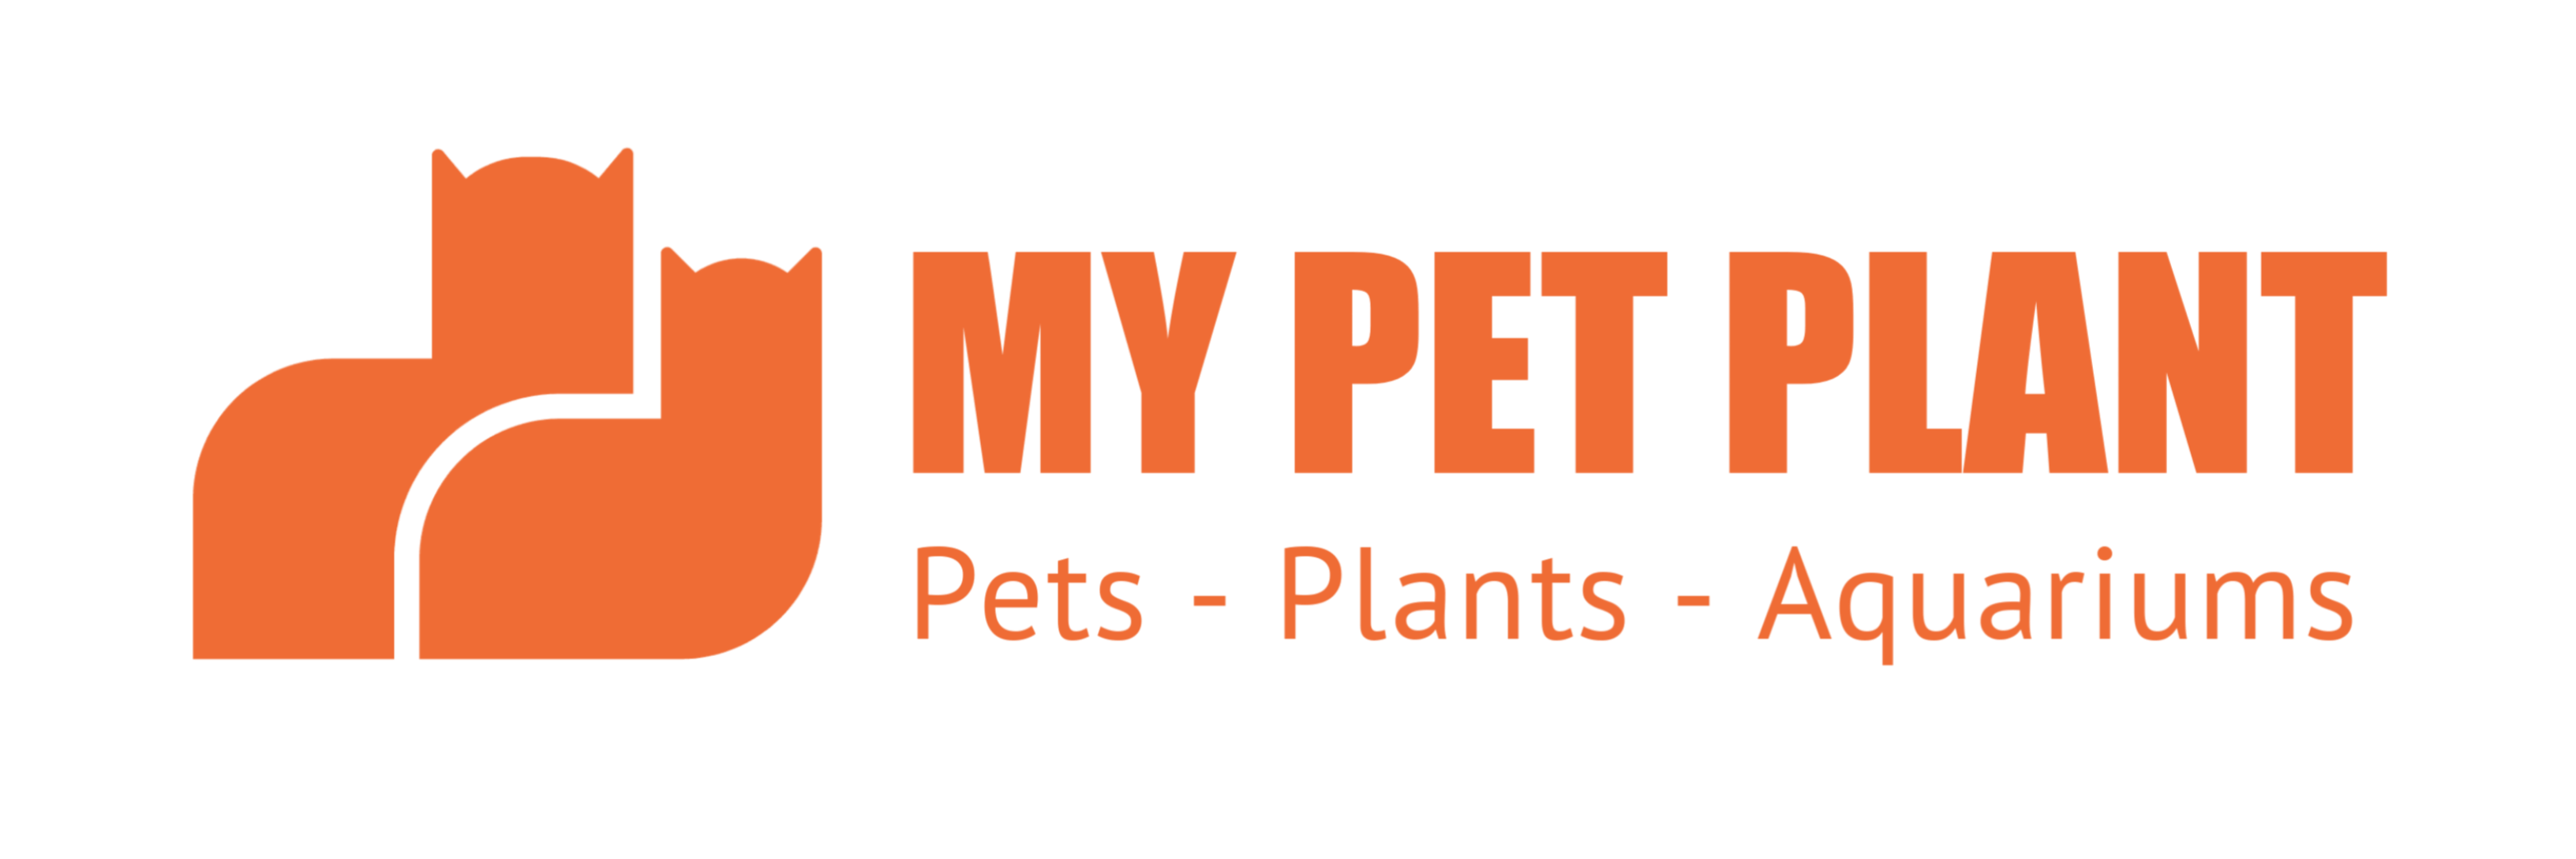 MY PET PLANT LOGO